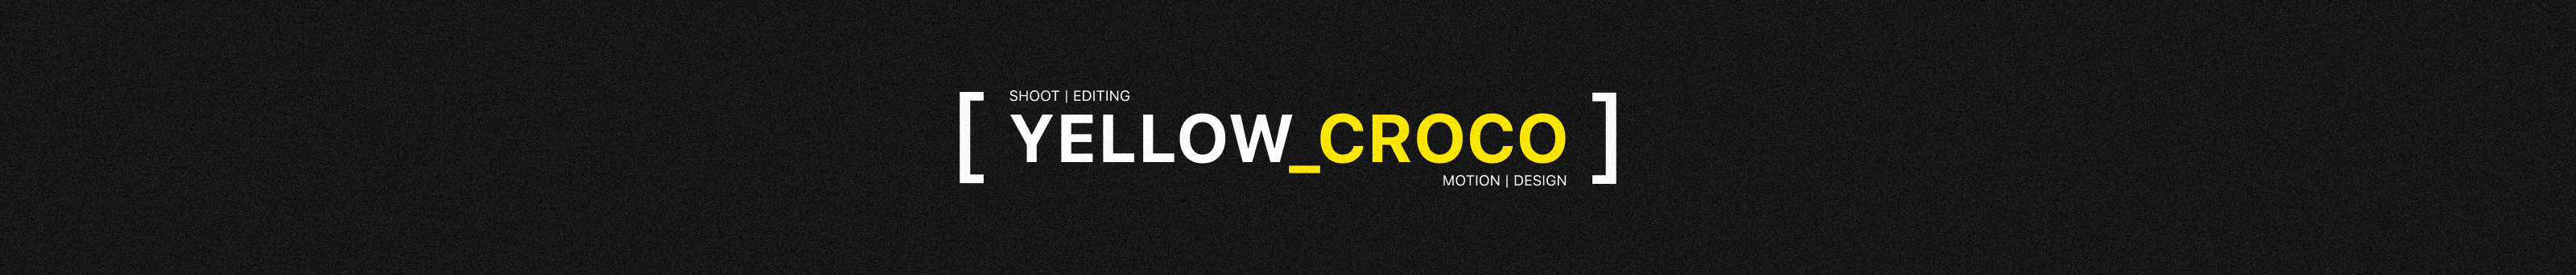 YELLOW CROCO's profile banner